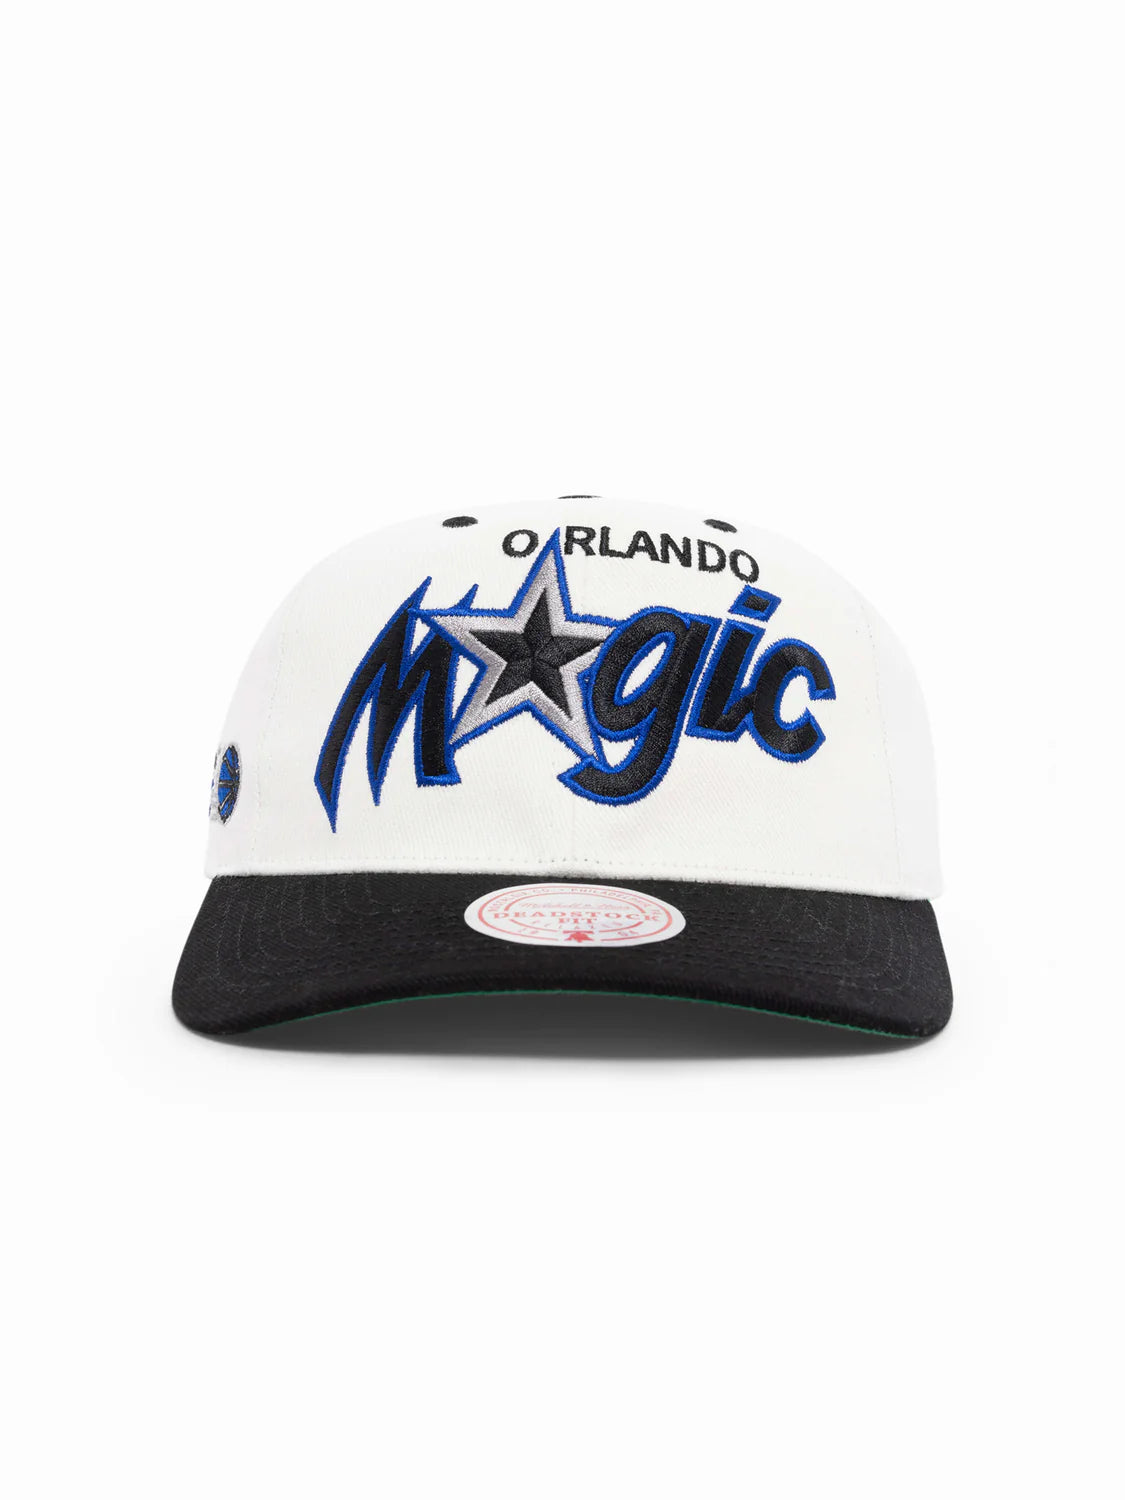 Retro Orlando Magic New Era Strapback Hat NBA